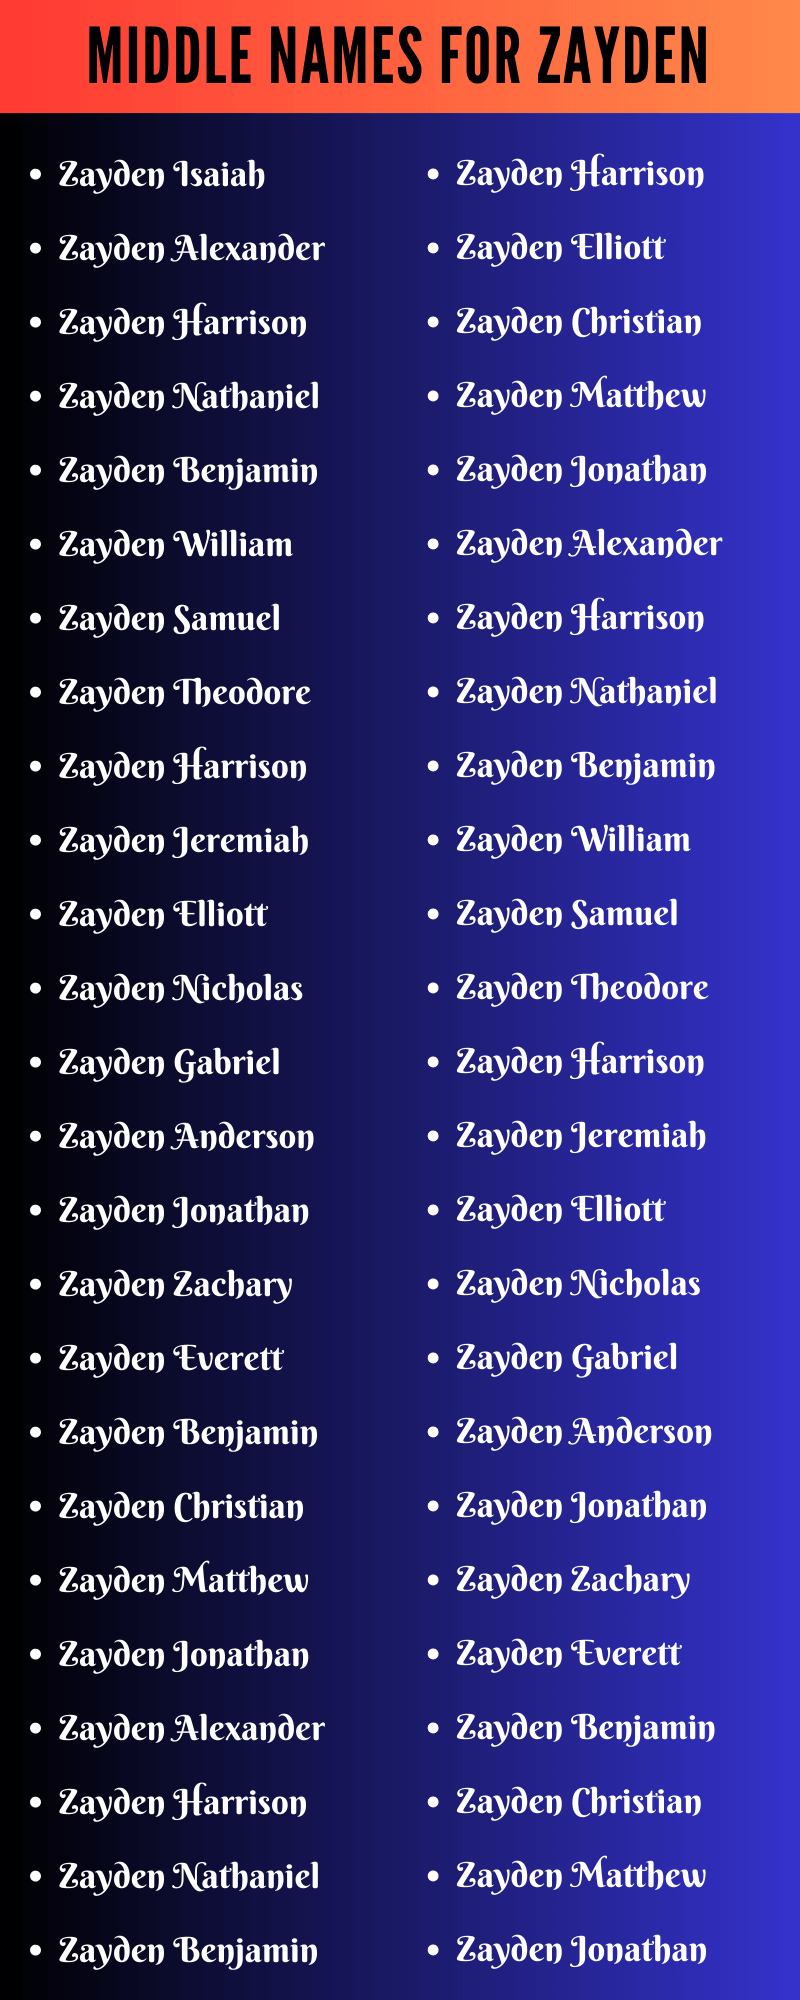 Middle Names For Zayden